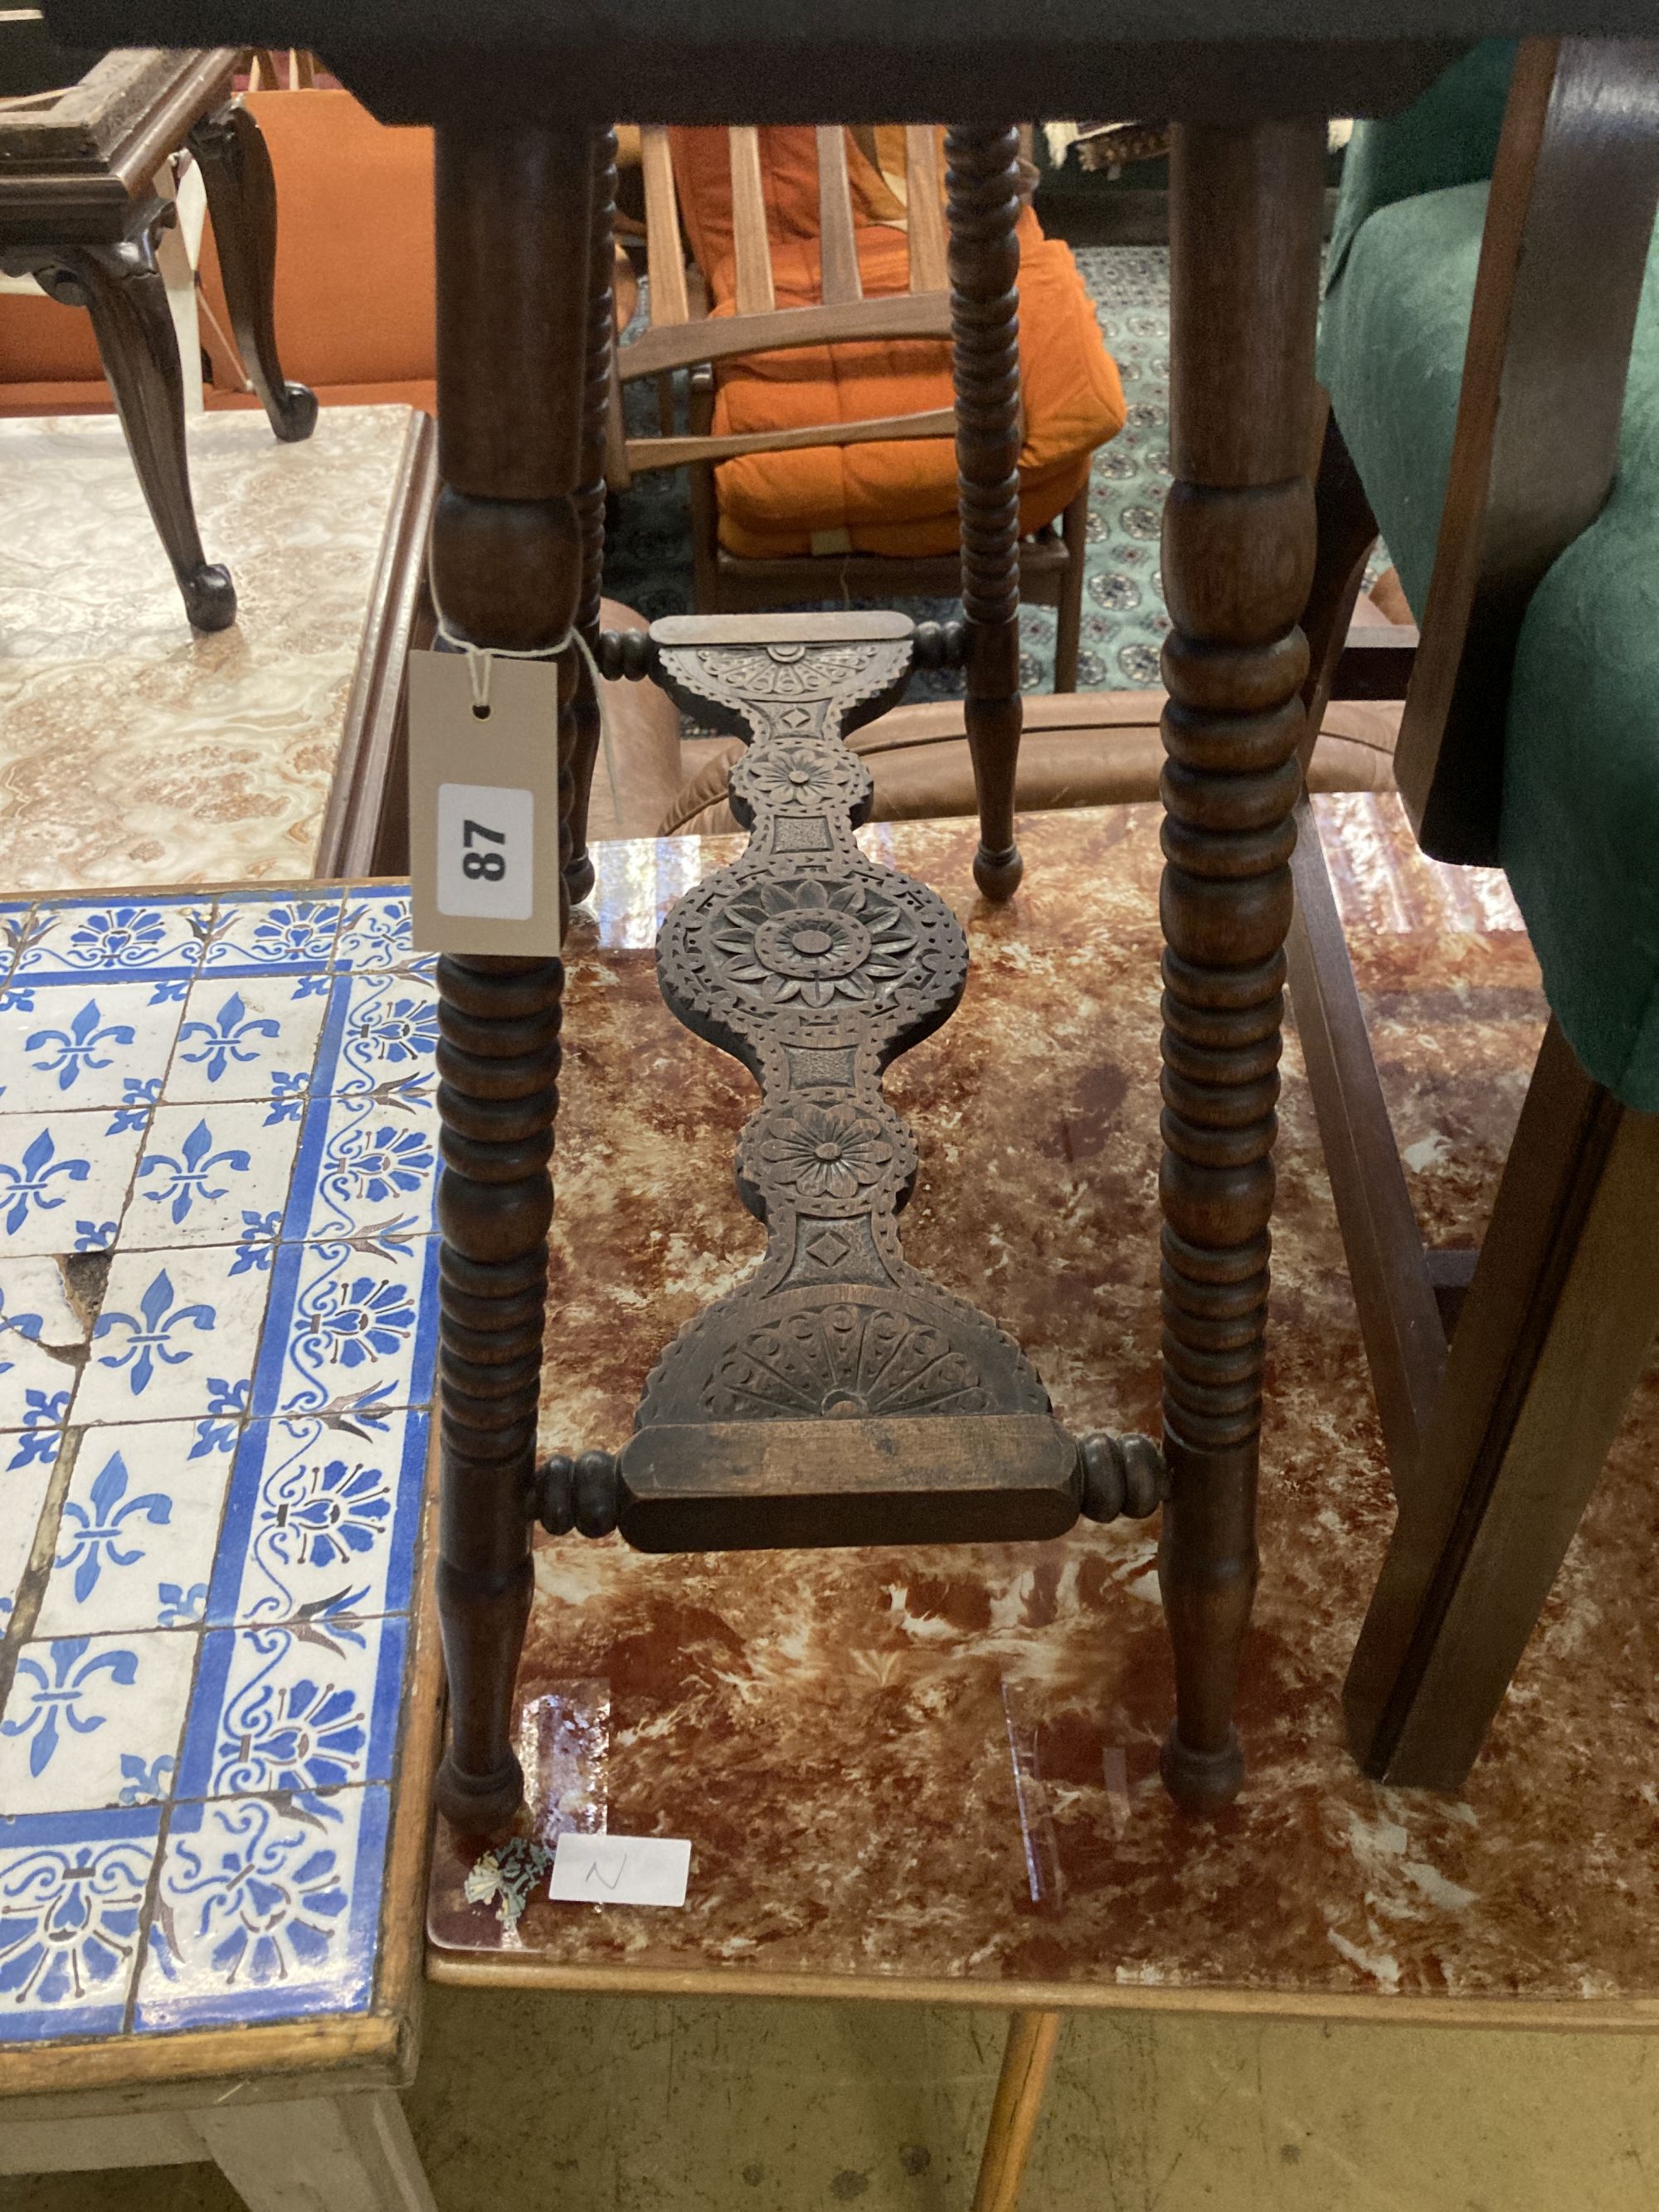 A carved rectangular bobbin leg occasional table, width 30cm height 62cm